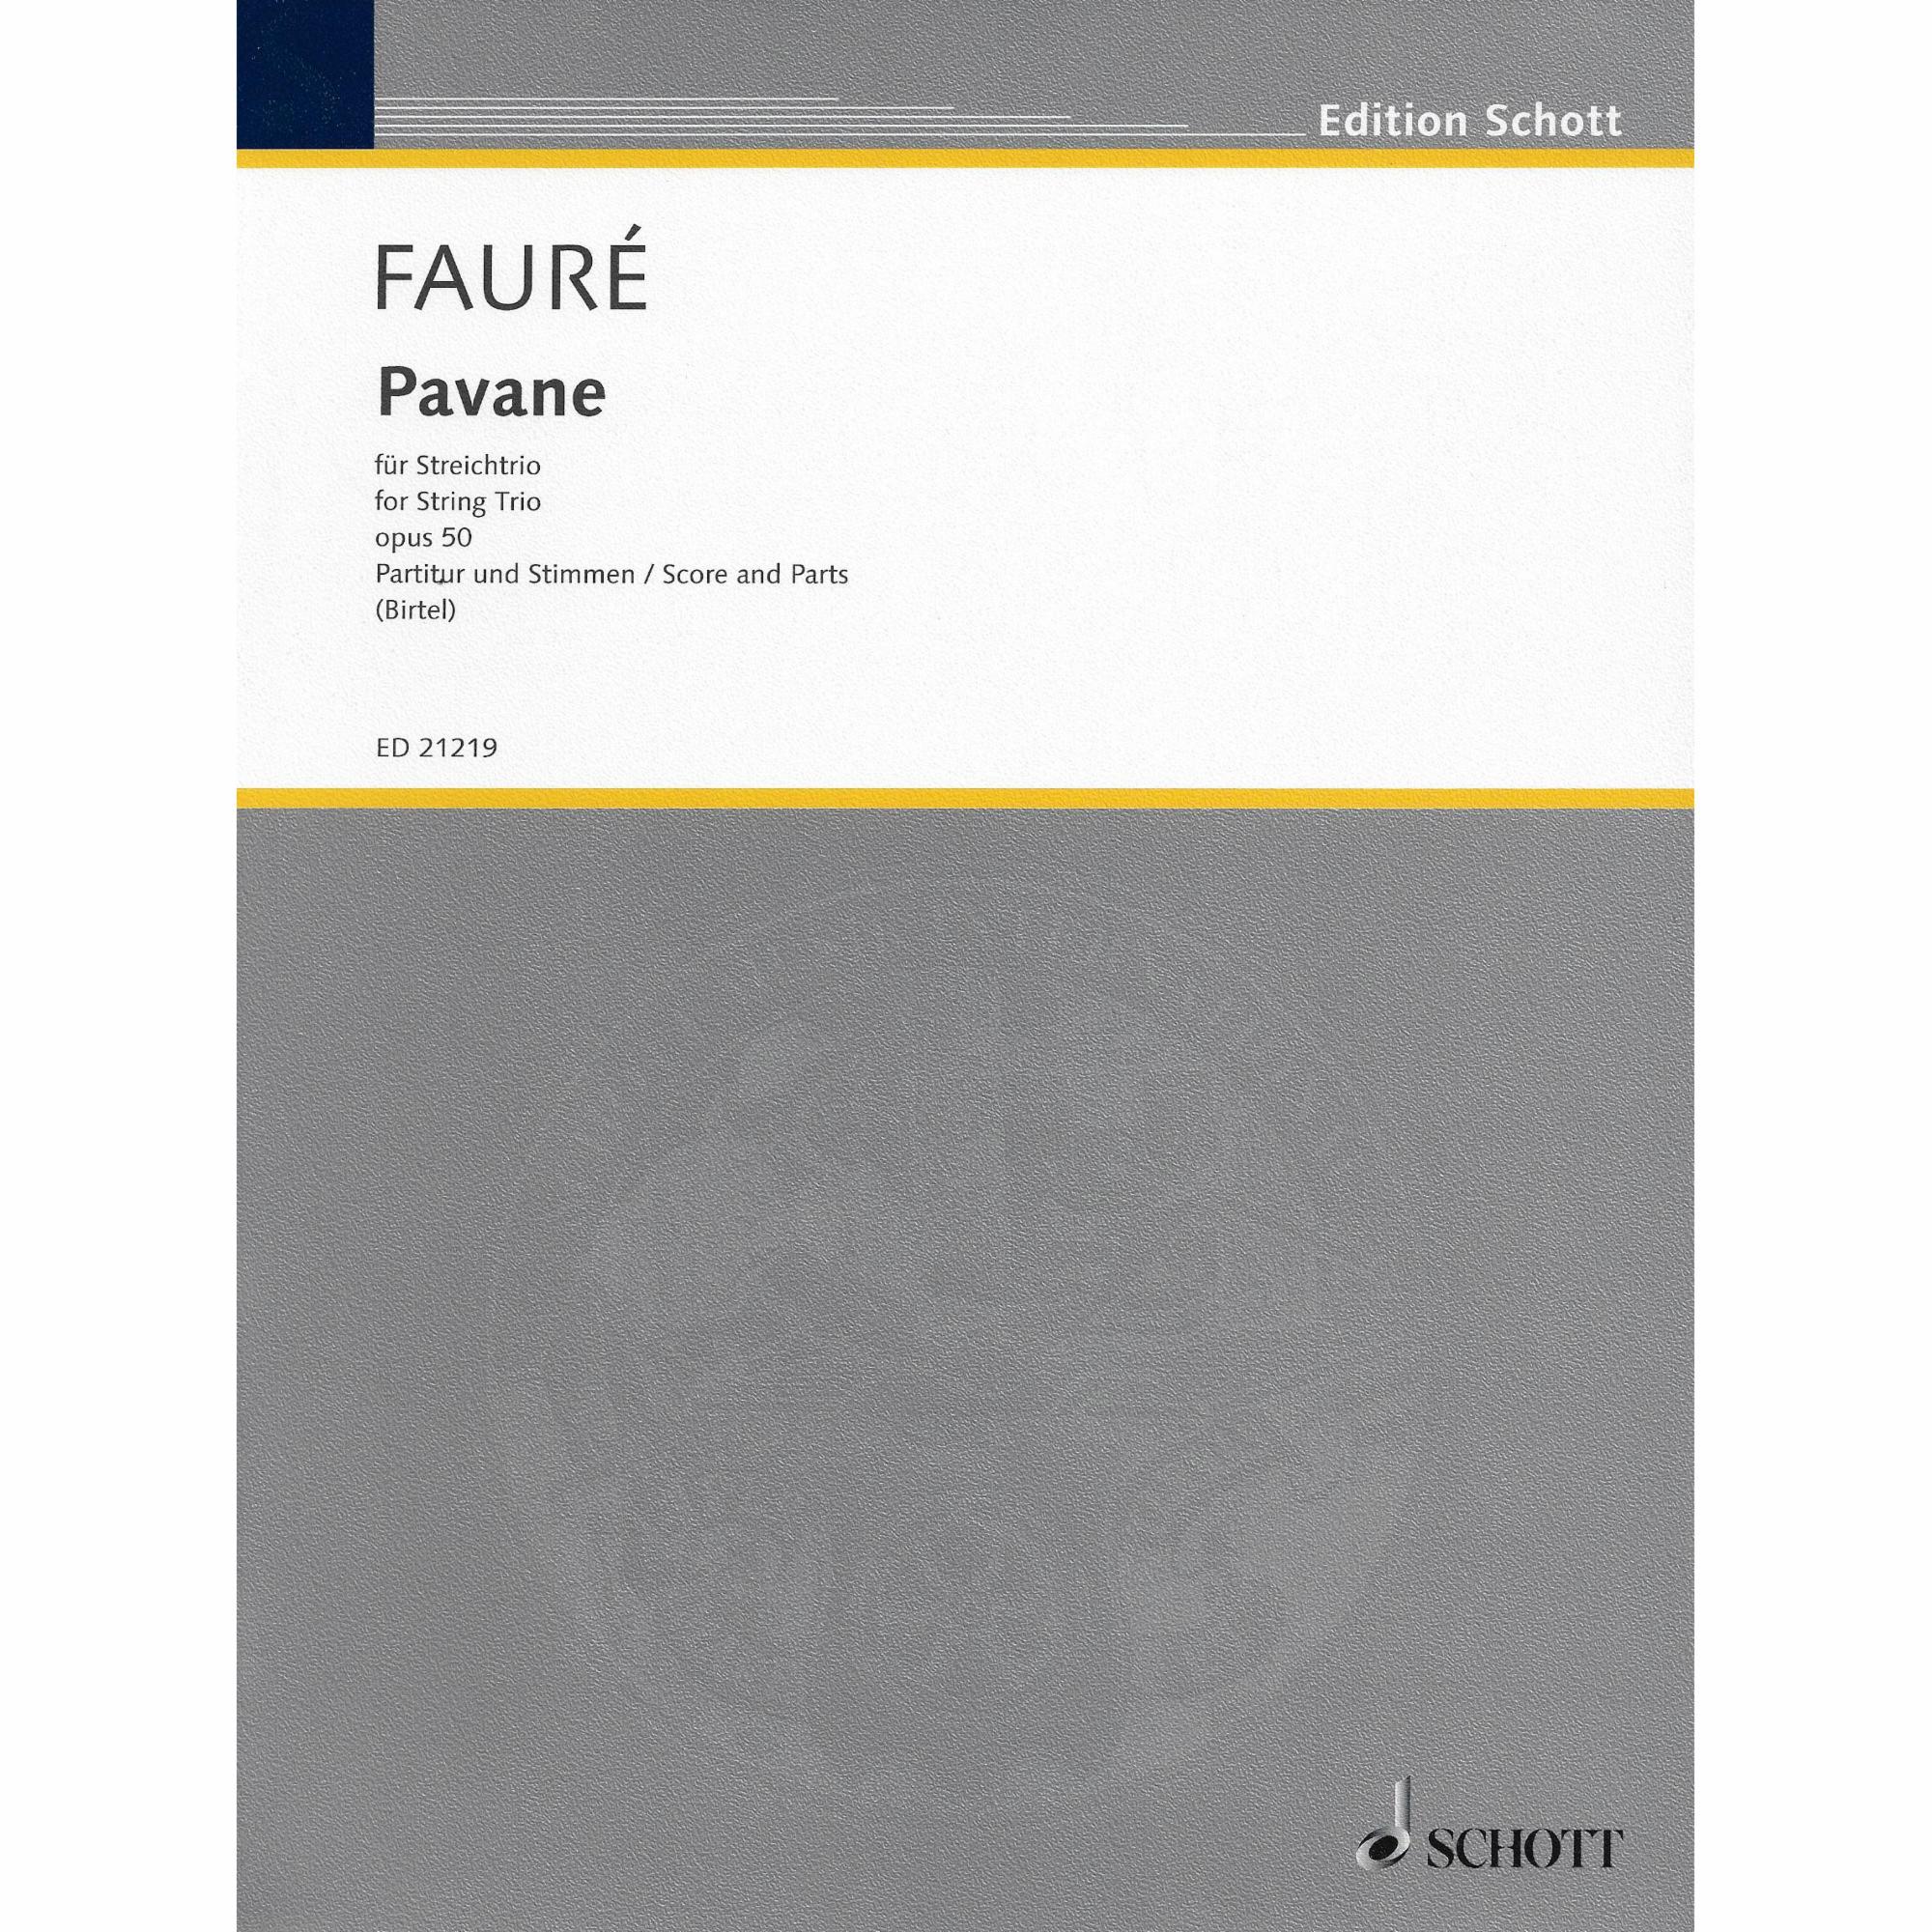 Faure -- Pavane, Op. 50 for Violin, Viola, and Cello